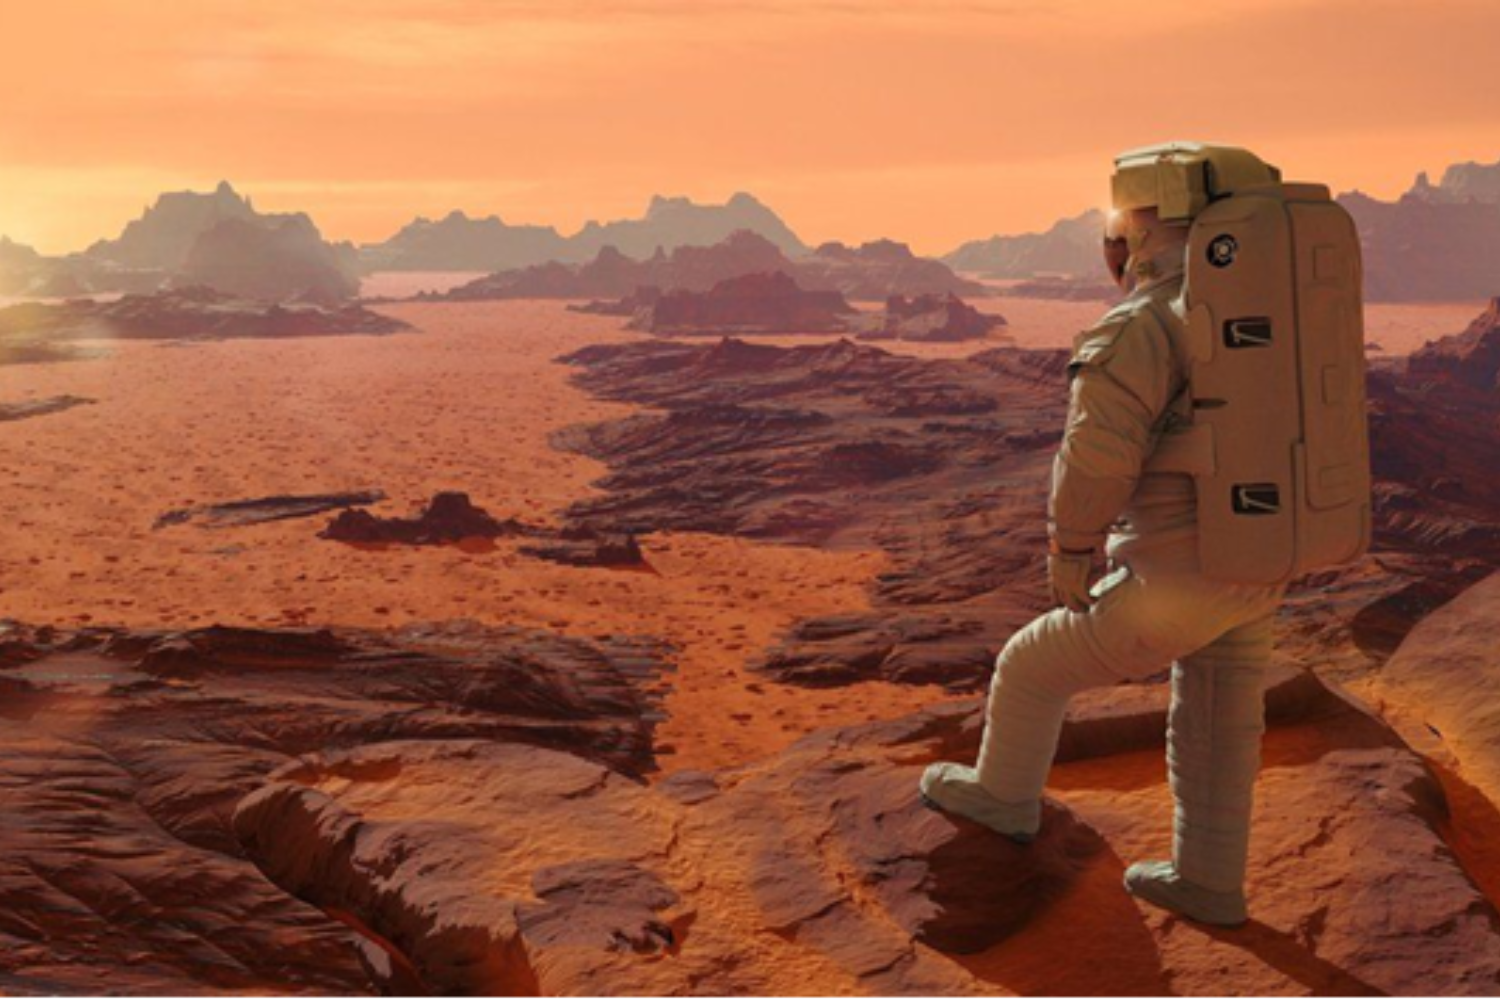 An artist impression of an astronaut on Mars